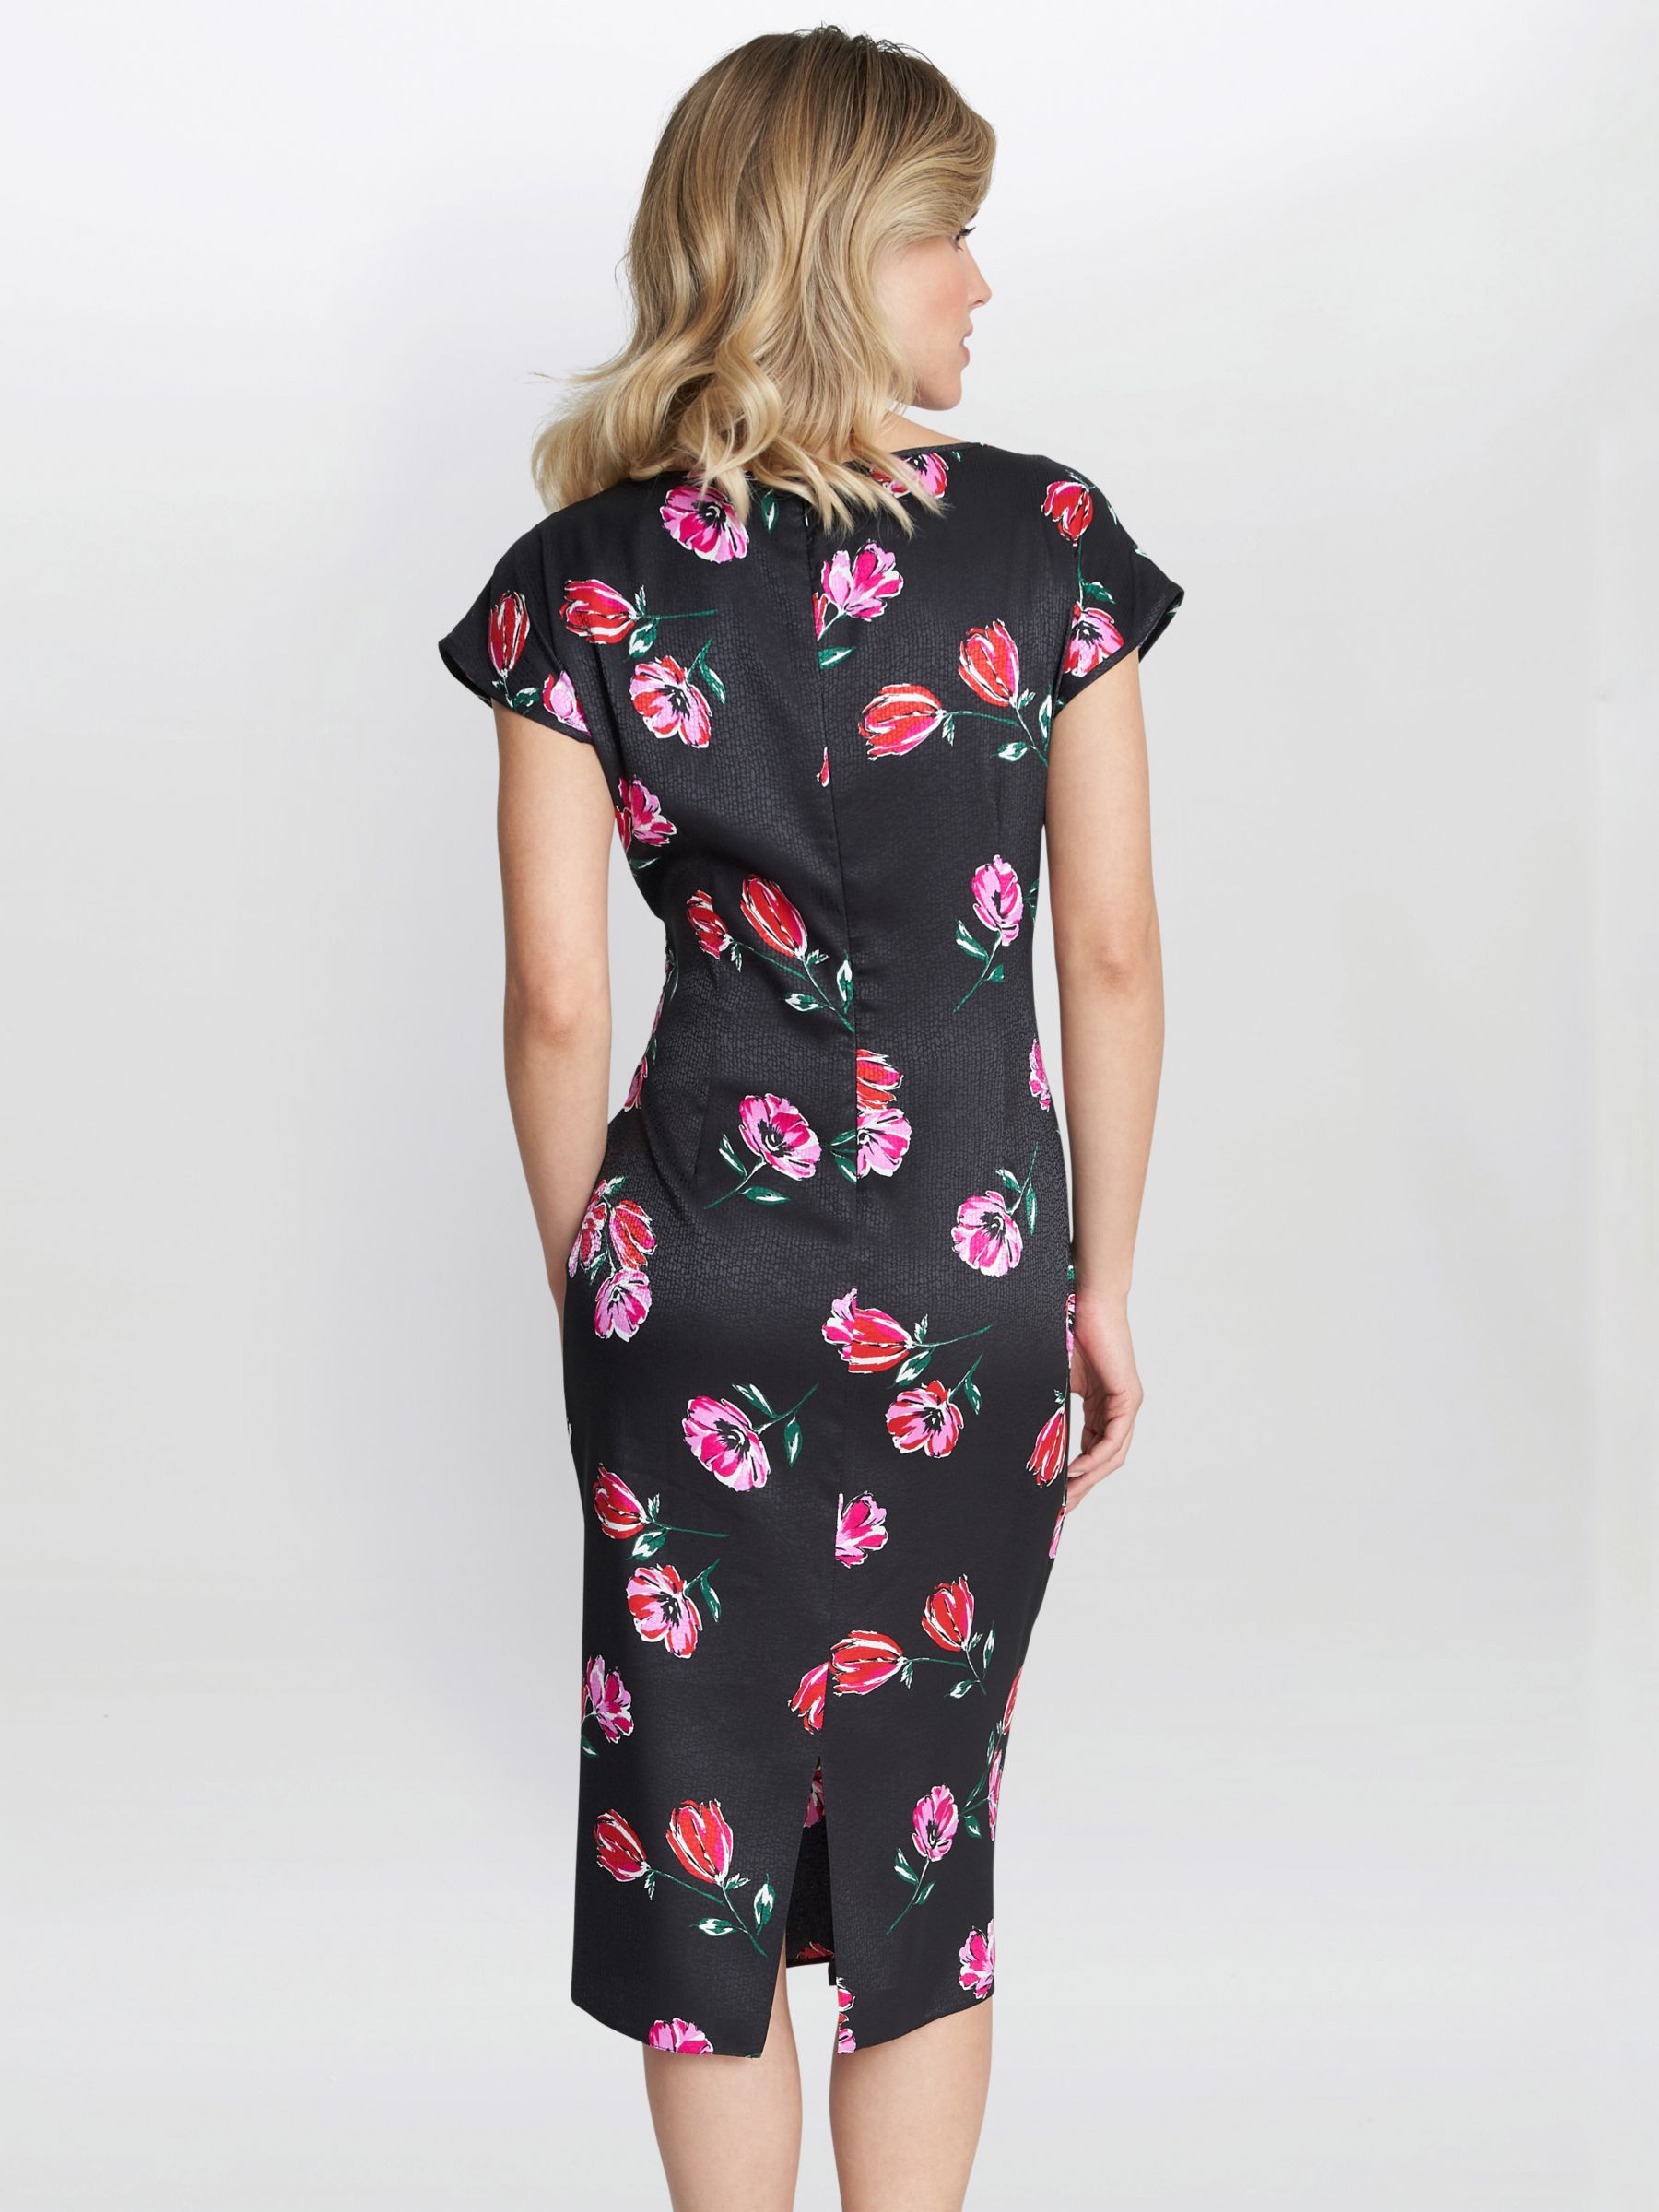 Gina Bacconi Saffron Floral Waterfall Midi Dress, Black/Pink, 20